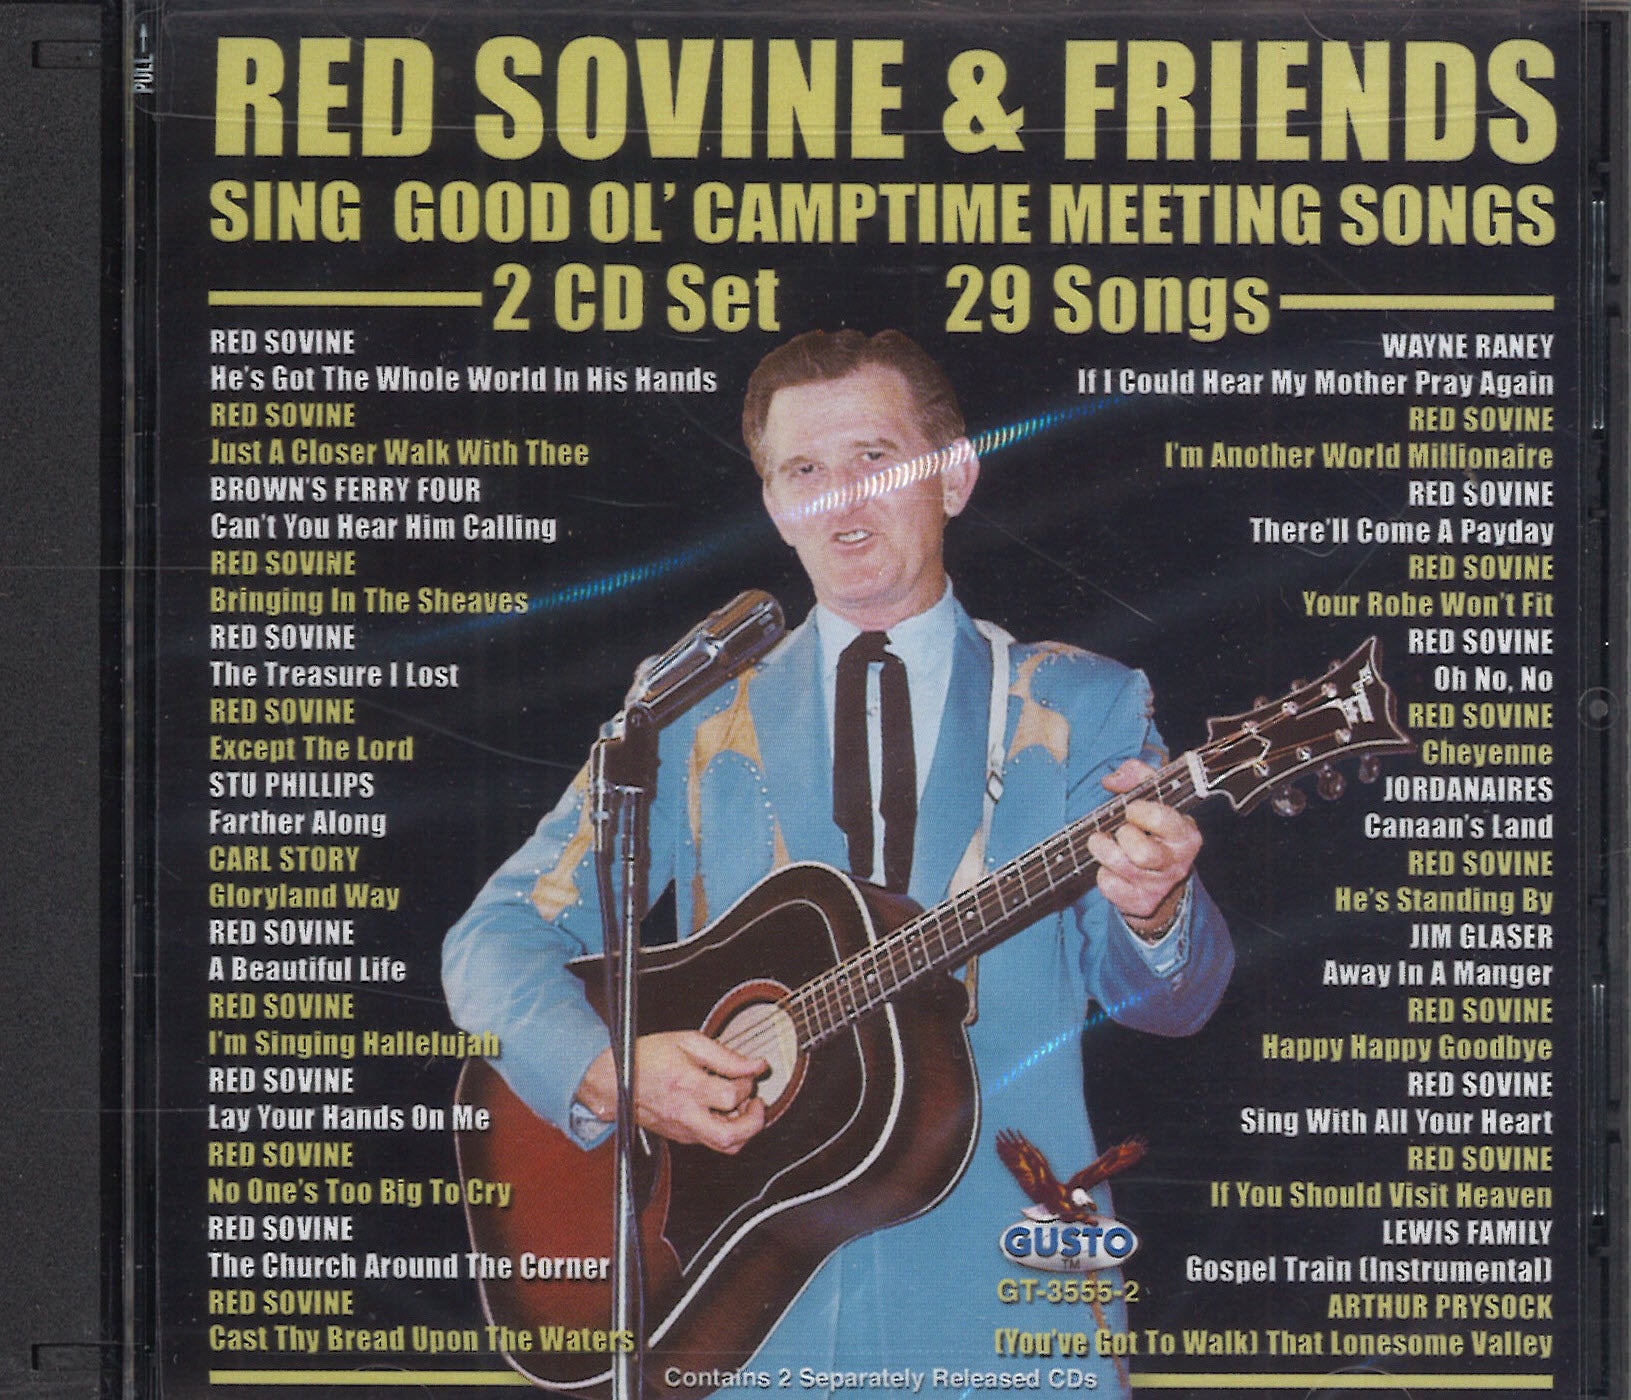 Red Sovine & Friends Sing Good Ol' Camptime Meeting Songs: 2 CD Set